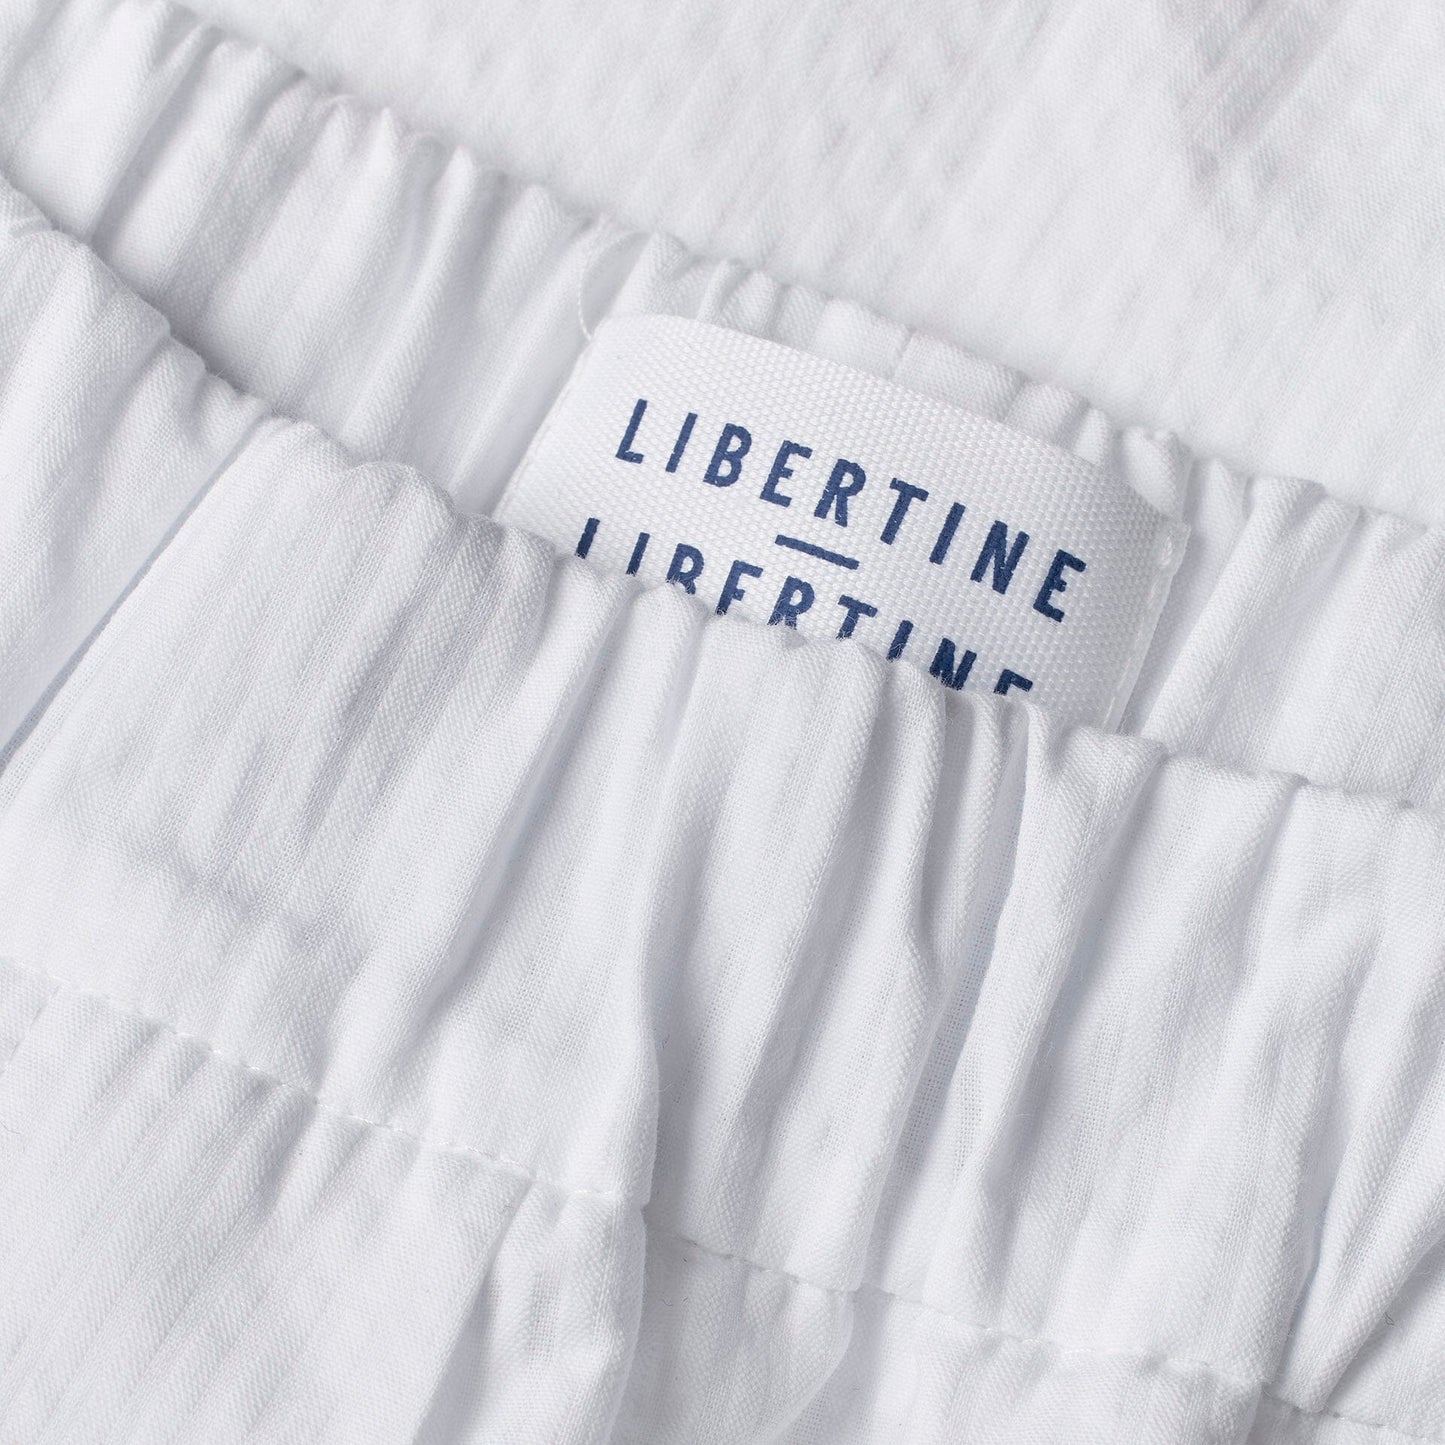 Libertine-Libertine Real Pants - White Pants Libertine-Libertine 